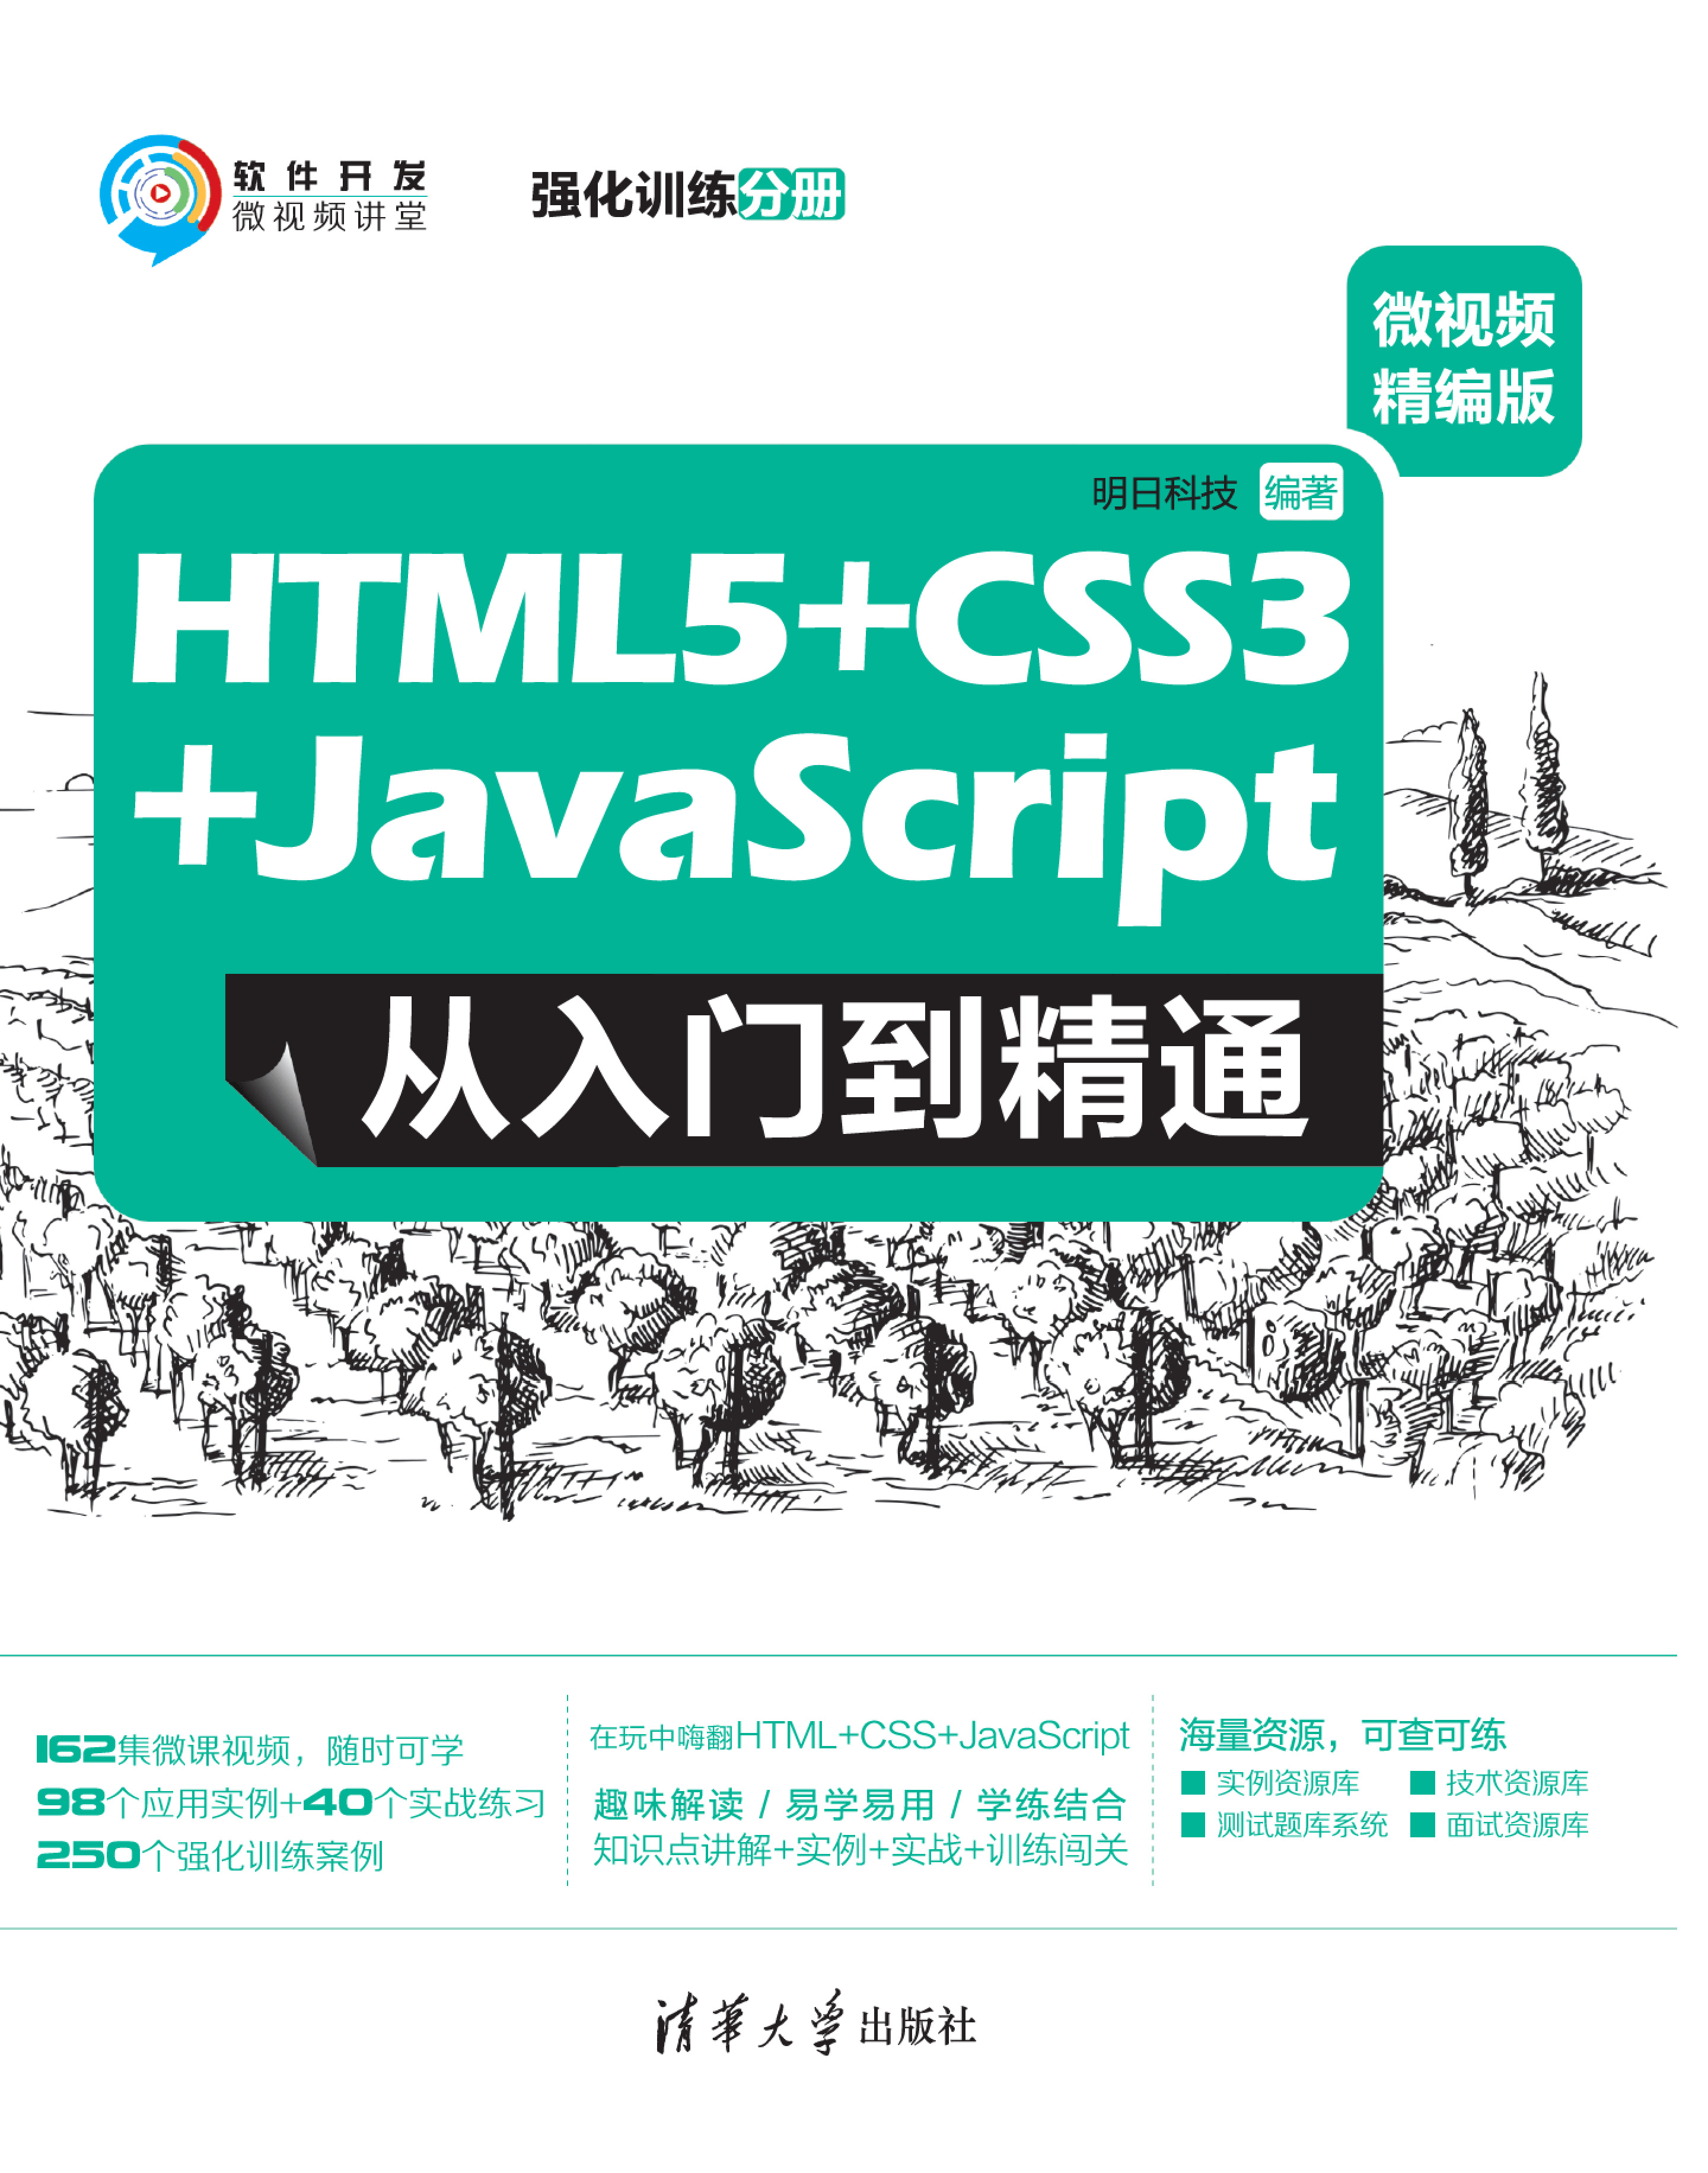 HTML5 CSS3 JavaScript 从入门到精通：微视频精编版（强化训练分册）-2020.5